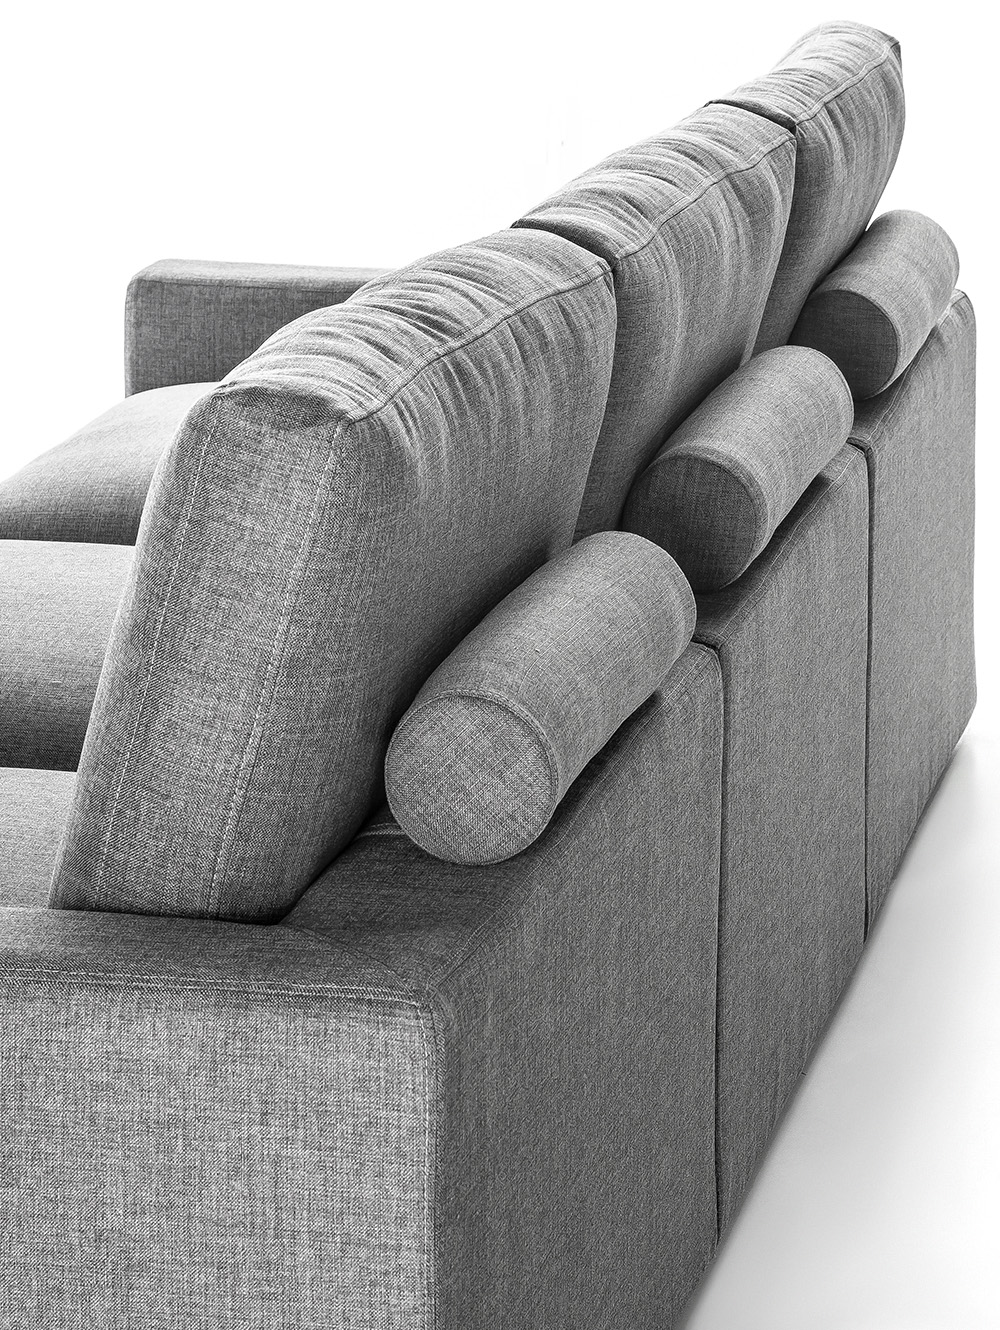 Sofa en ele gris oscuro-SOFA BELMONT SPAZIO PETROLEO-Landmark-4.jpg image number null